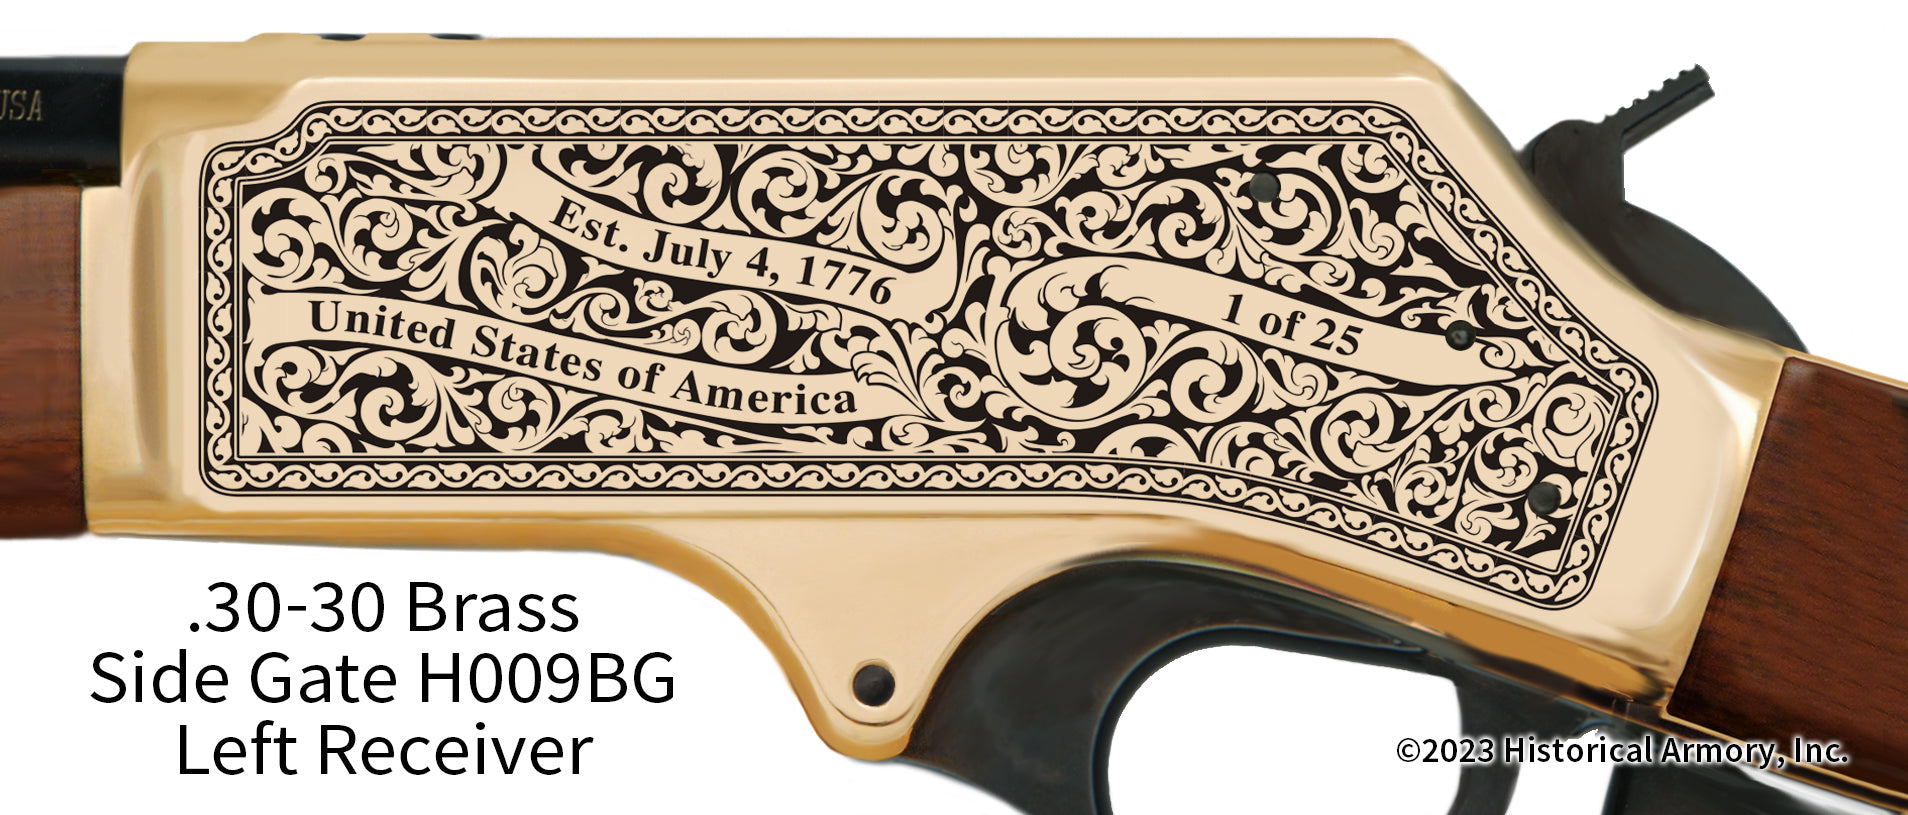 Caroline County Maryland Engraved Henry .30-30 Brass Side Gate Rifle